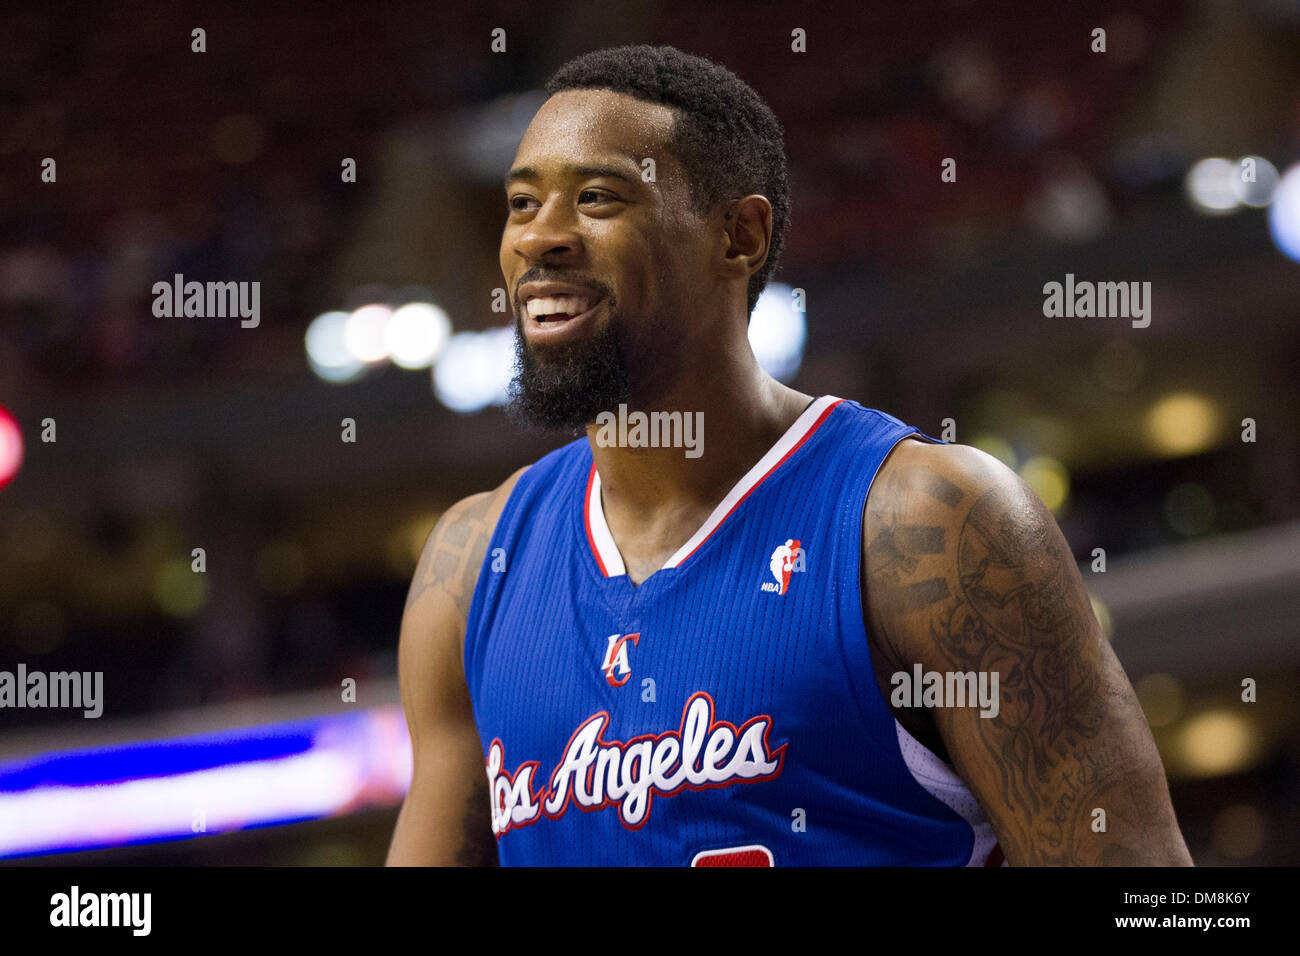 Deandre Jordan Los Angeles Clippers #6 Jersey player shirt